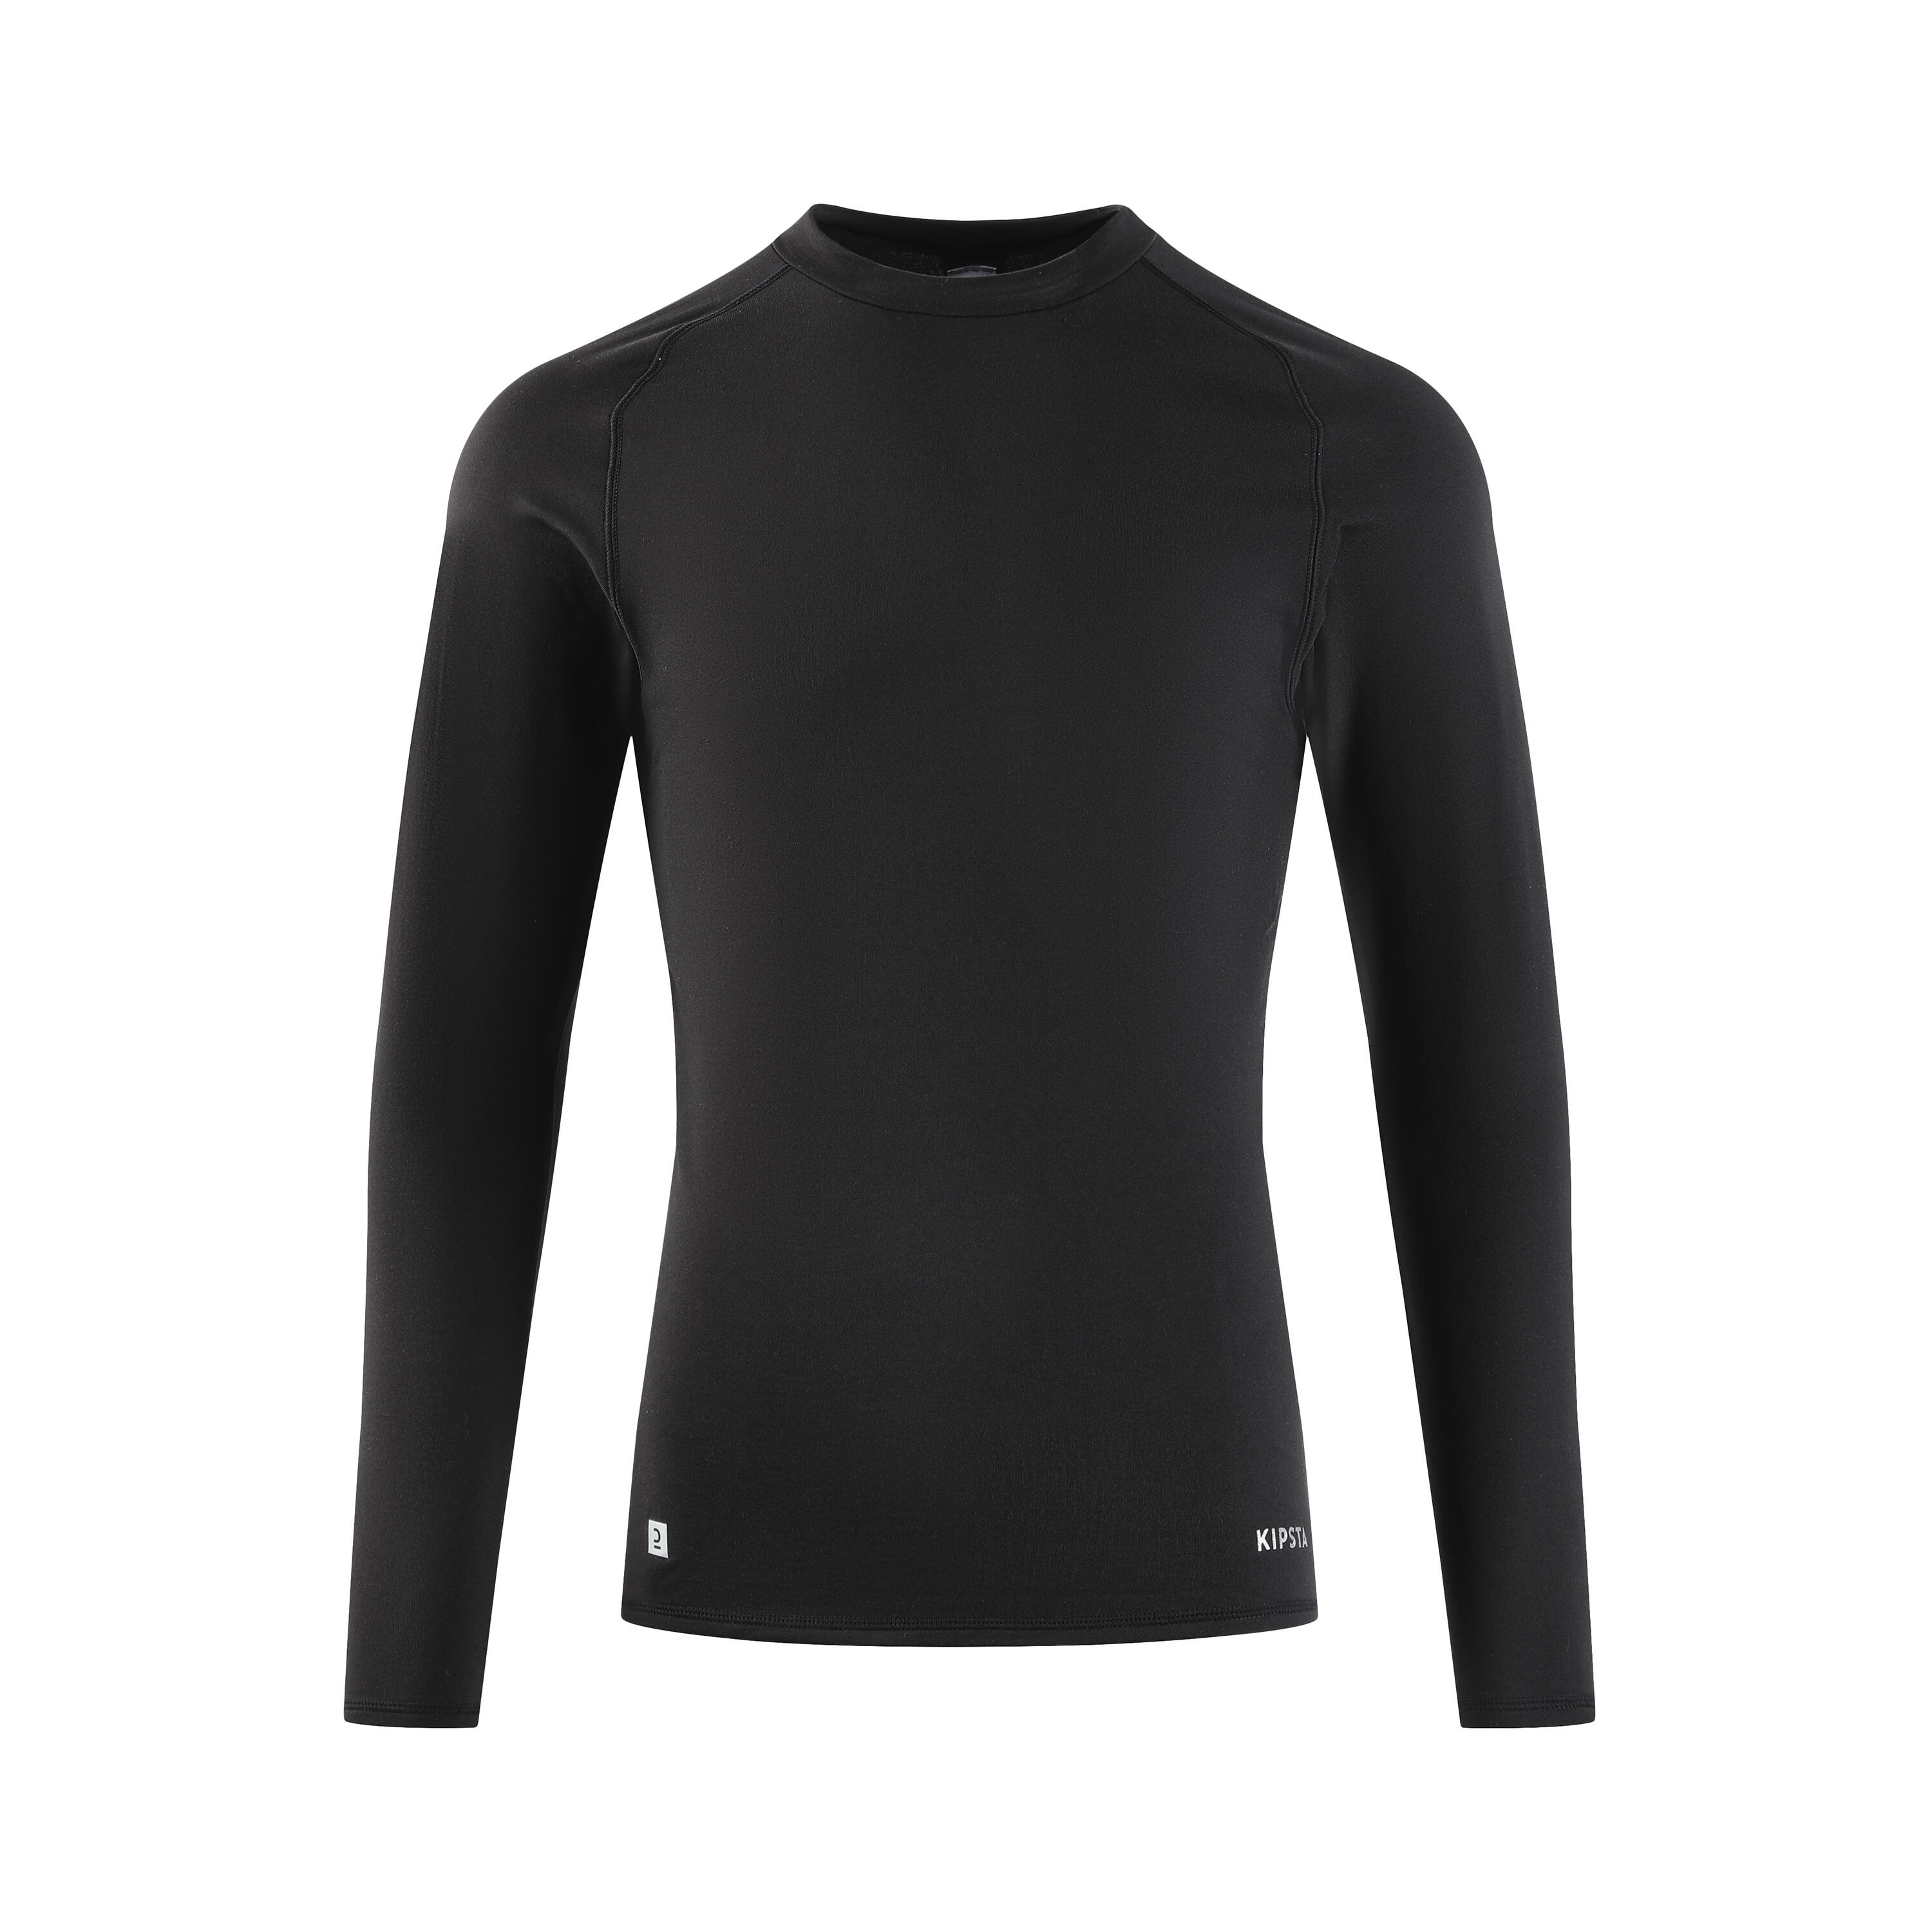 Adult Long-Sleeved Thermal Football Base Layer Top Keepcomfort 100 - Black 3/7